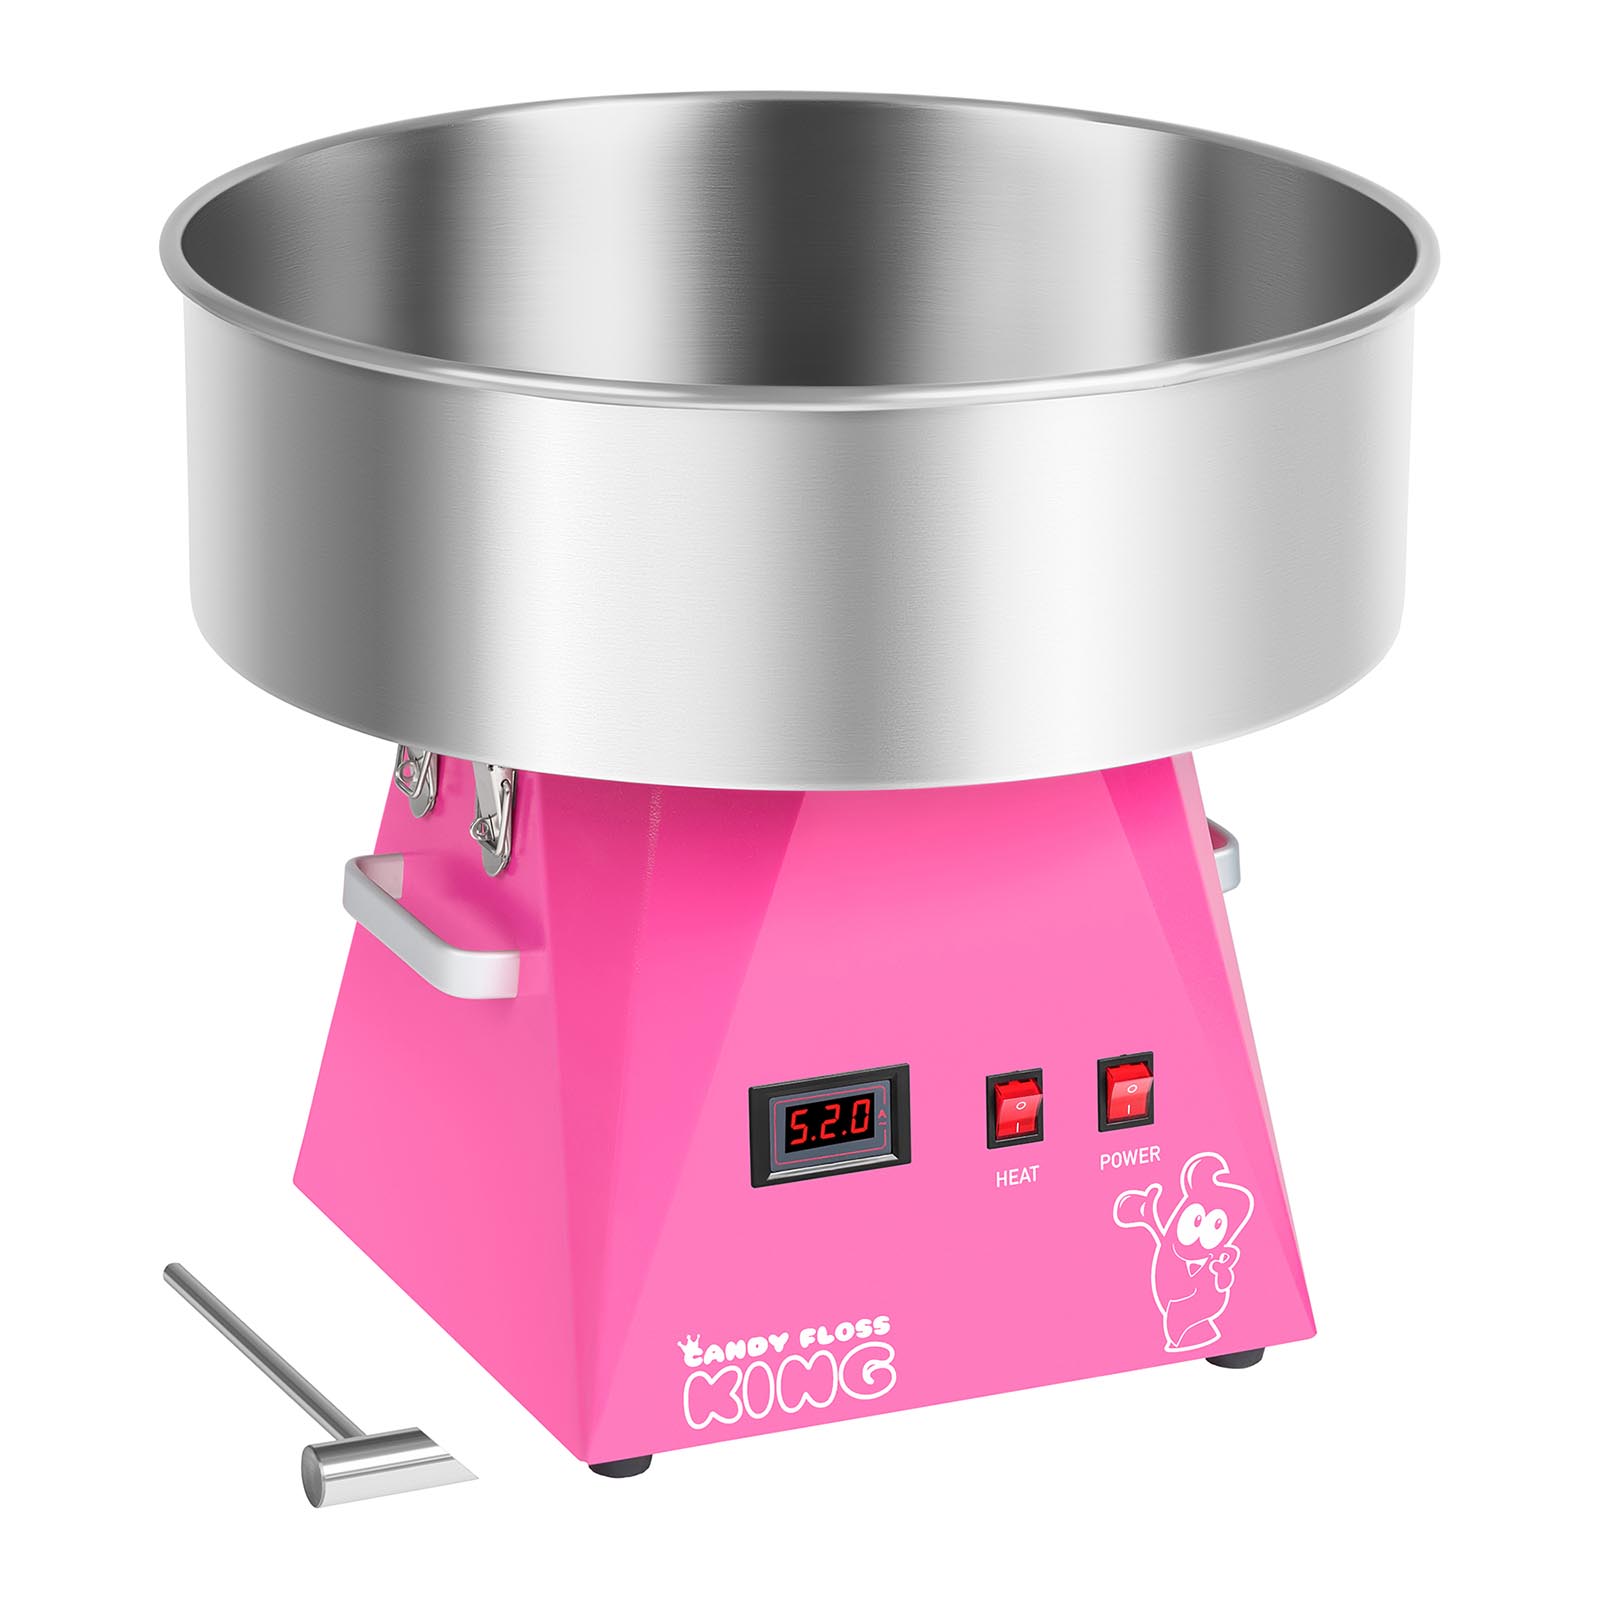 Souprava stroje na výrobu cukrové vaty - 52 cm - růžová/bílá